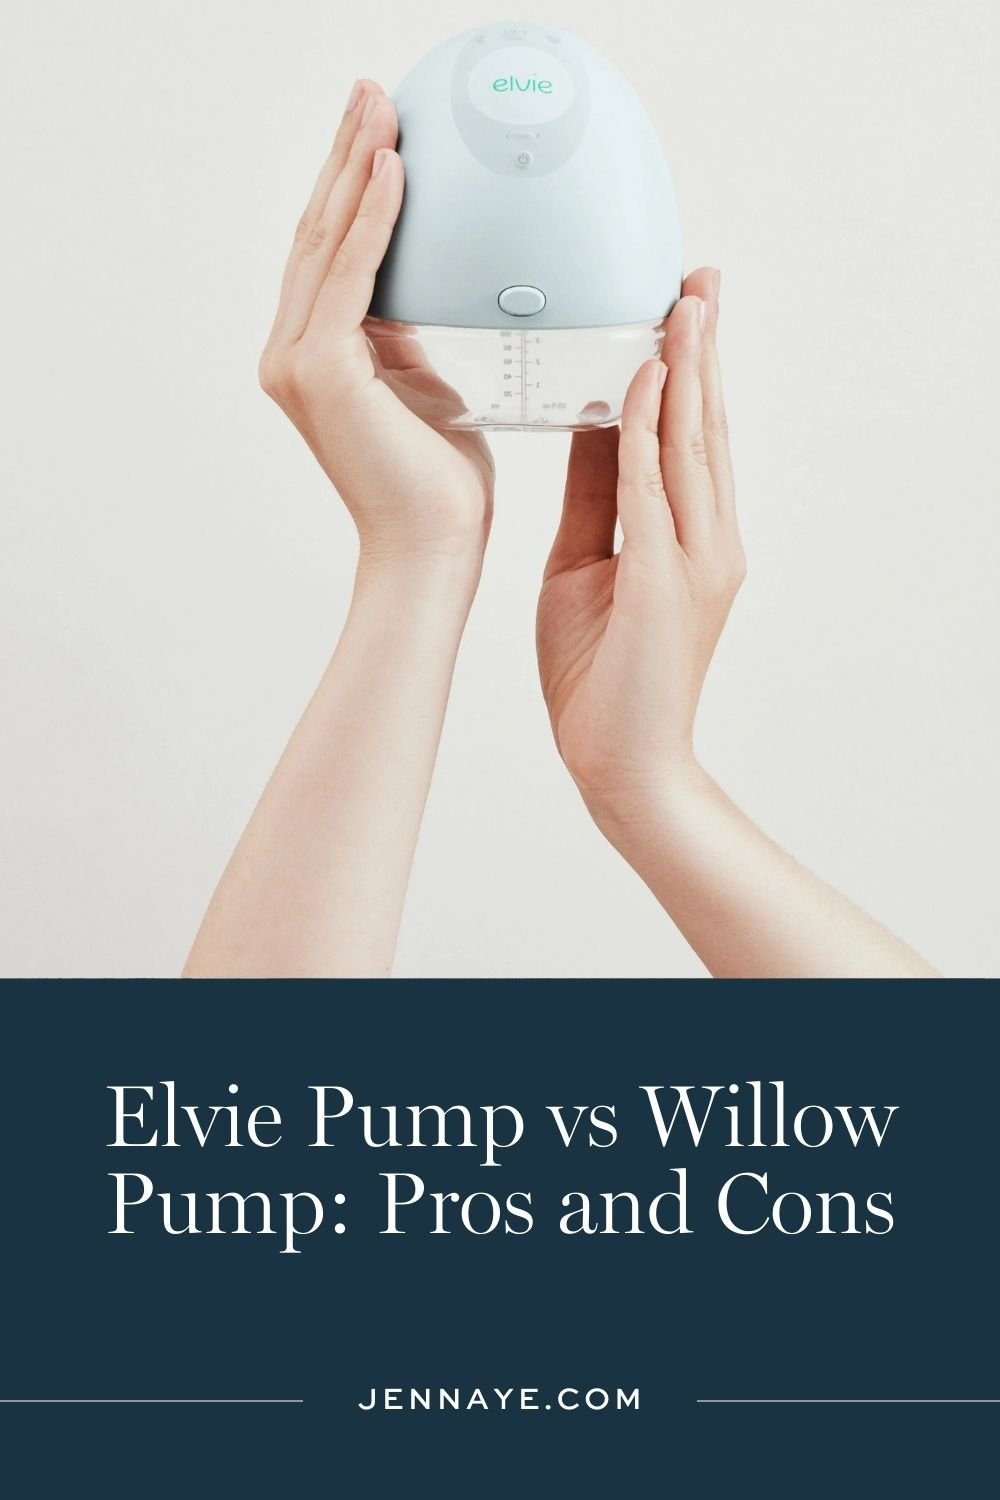 Elvie Pump, Silent, Wearable, Smart Breast Pump, Elvie